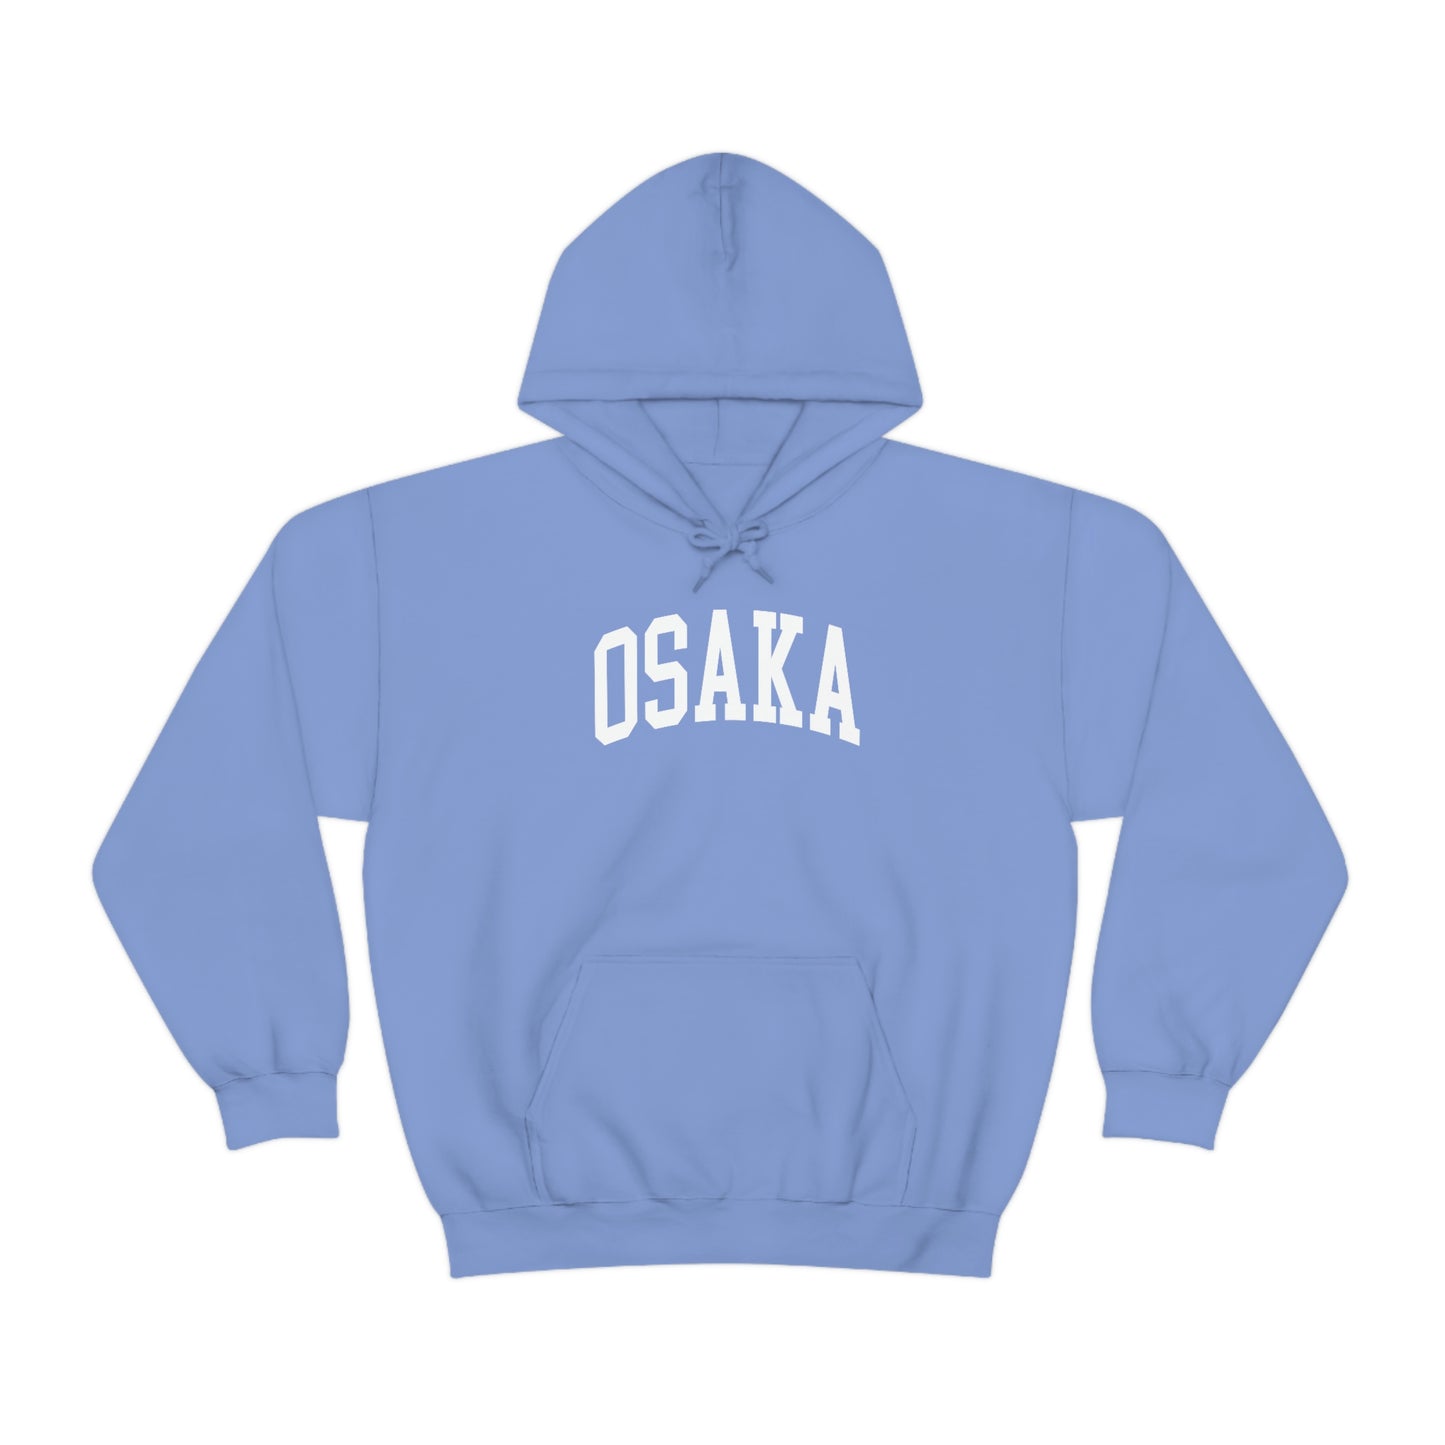 Osaka Hoodie Osaka Japan Hooded Sweatshirt College Style Pullover Vintage Inspired Sweater